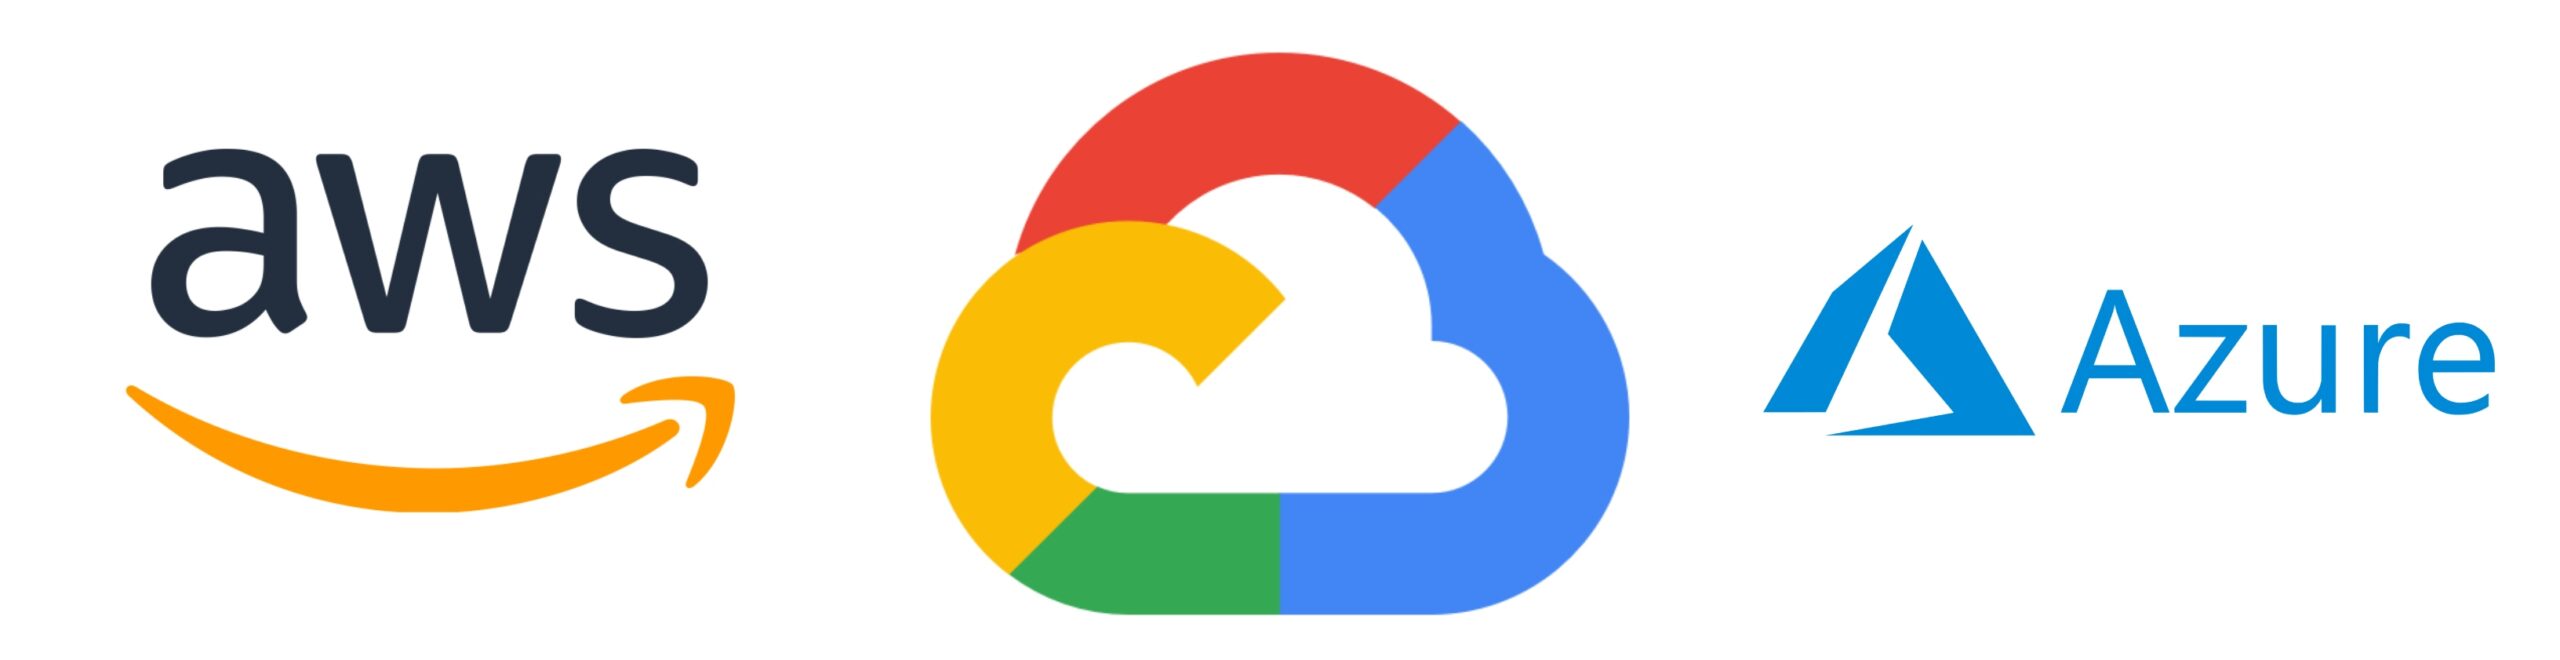 Logo de las nubes: AWS, GCP y Azure